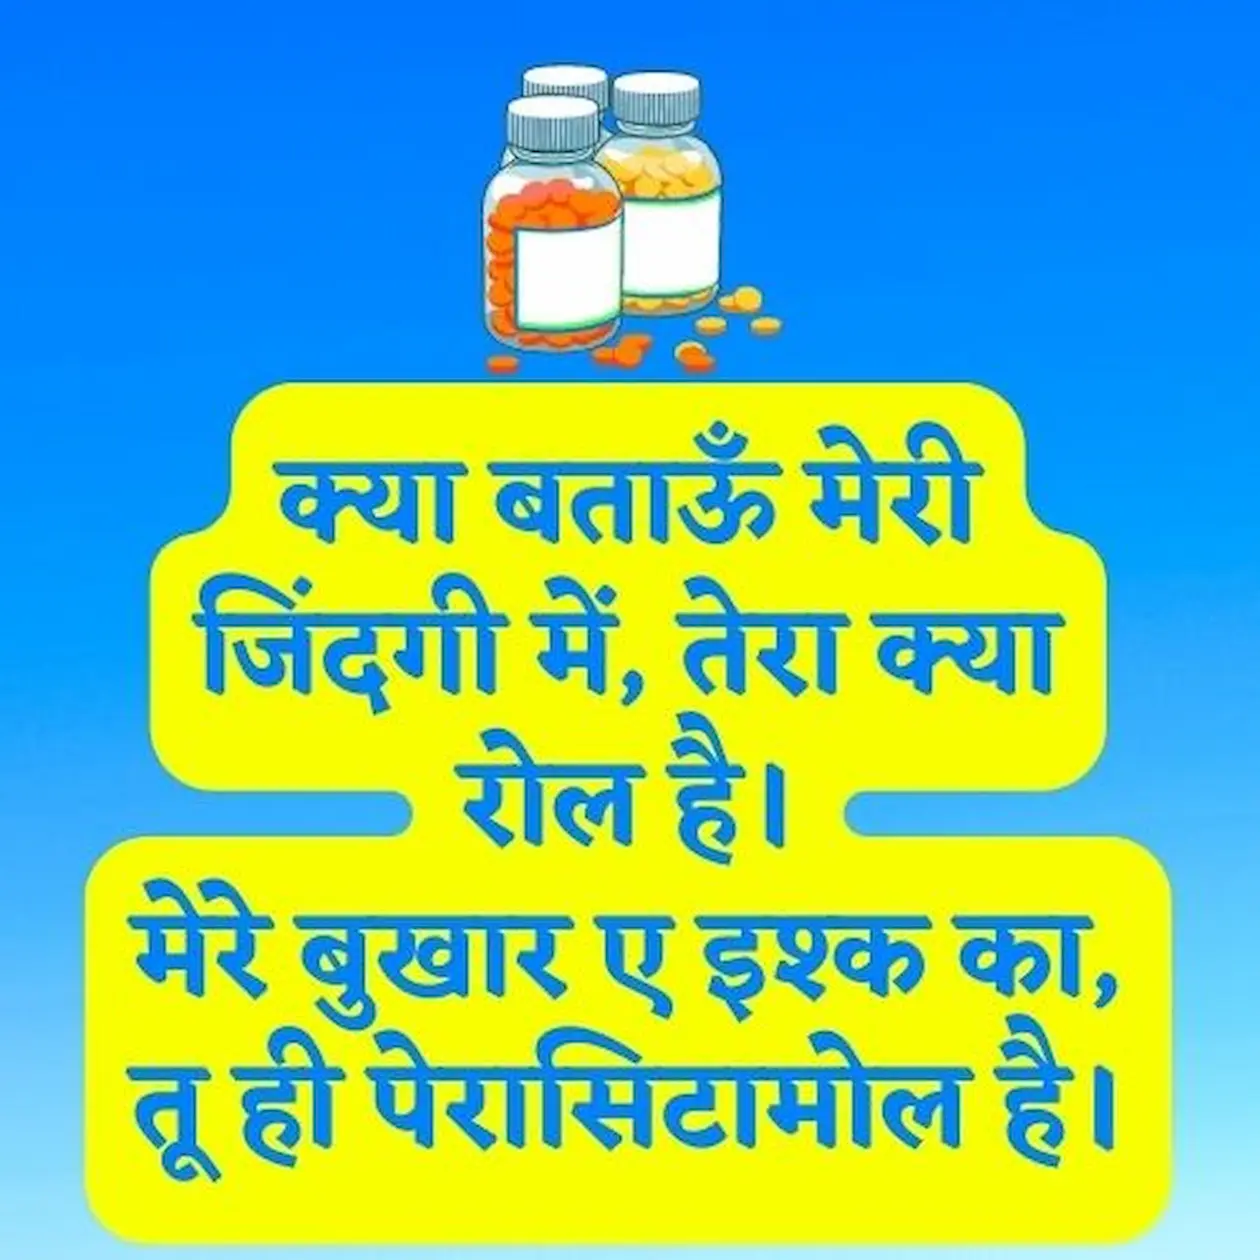 Medicine animation. Funny love proposal in Hindi.